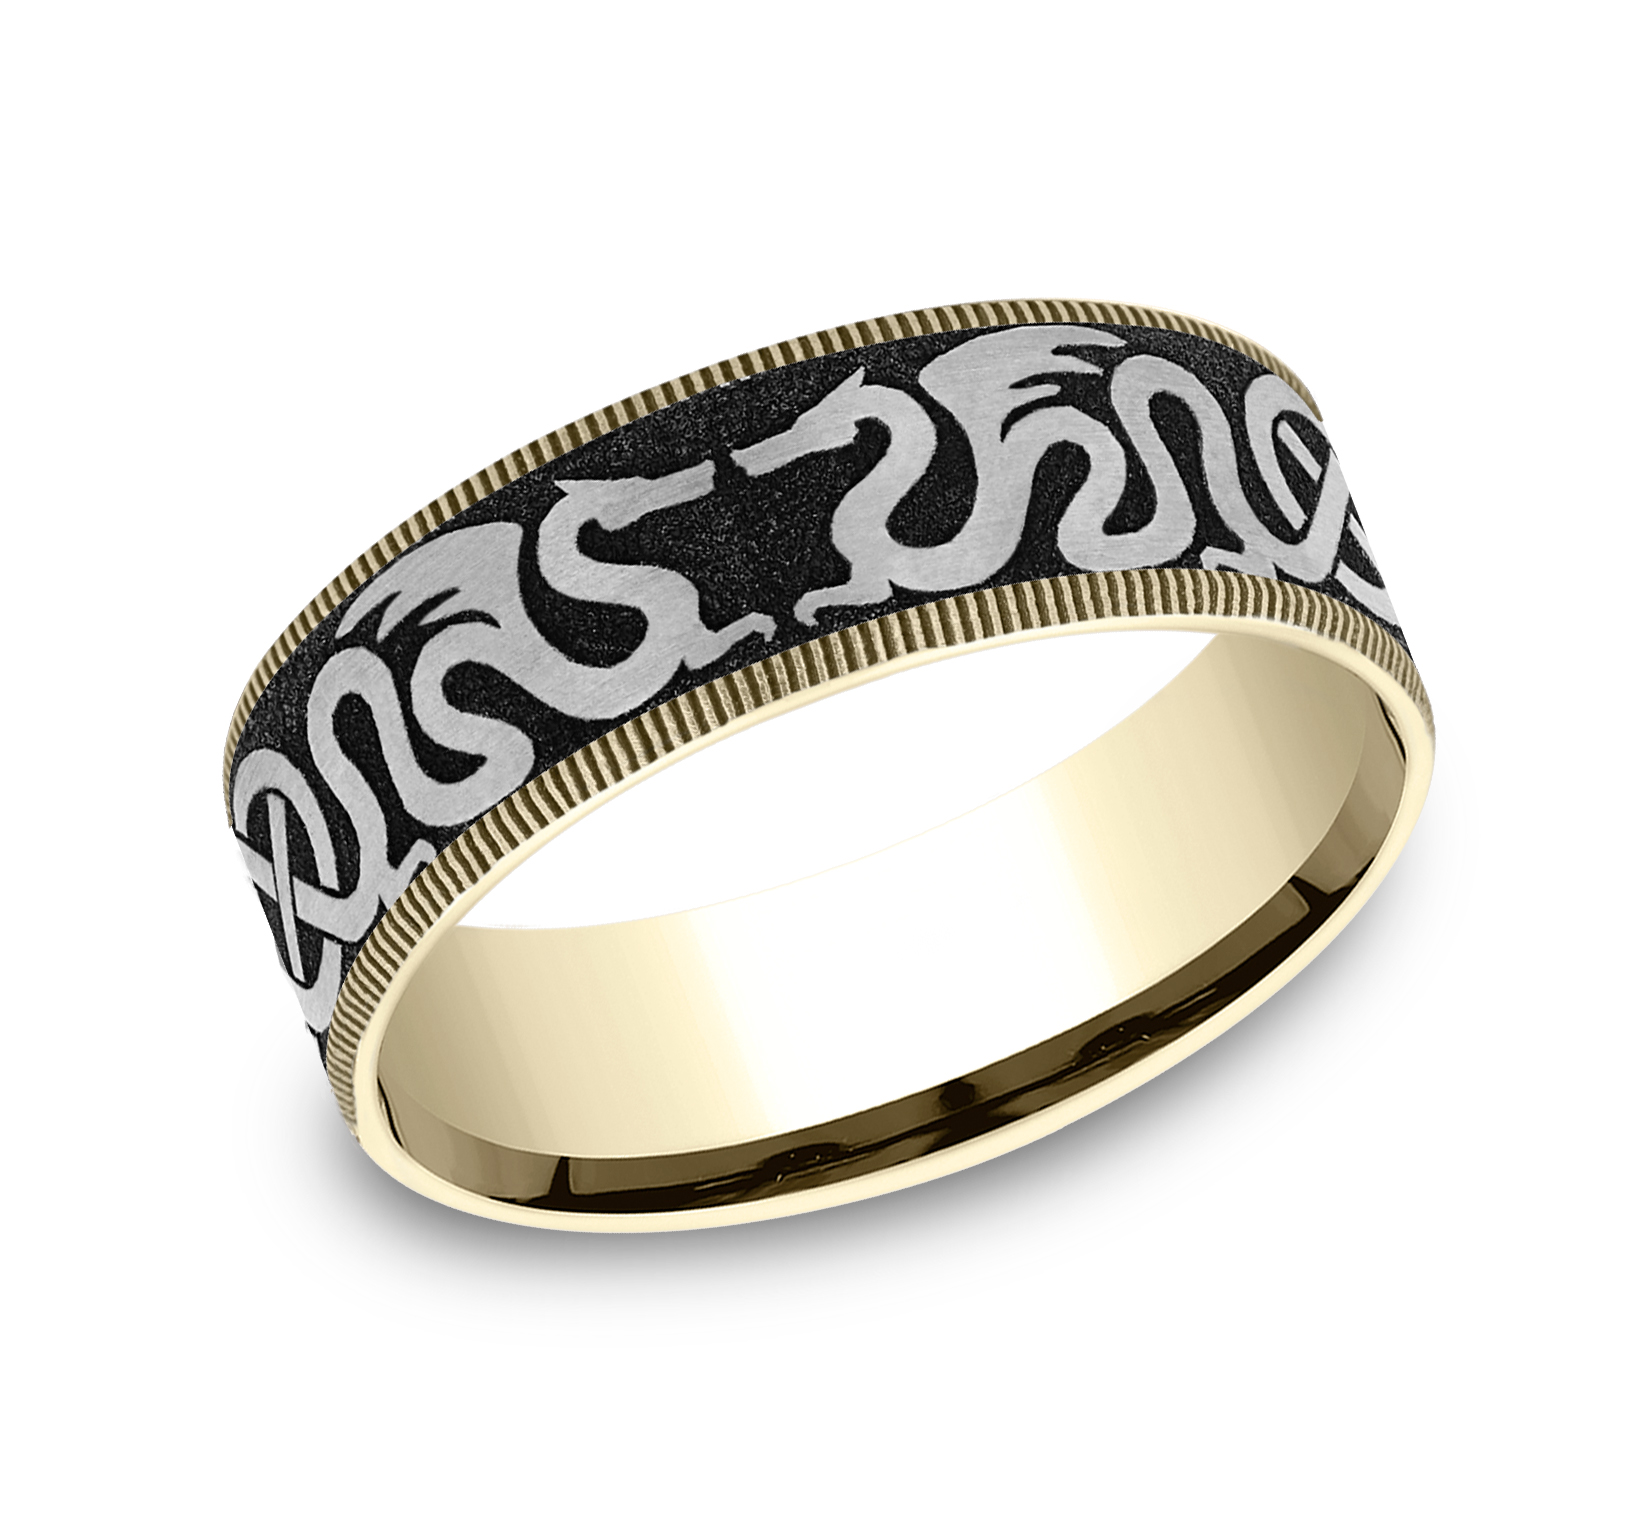 Sleek Men’s Dragon Ring by Ammara Stone, available at Deutsch Fine Jewelry in Houston, Texas.